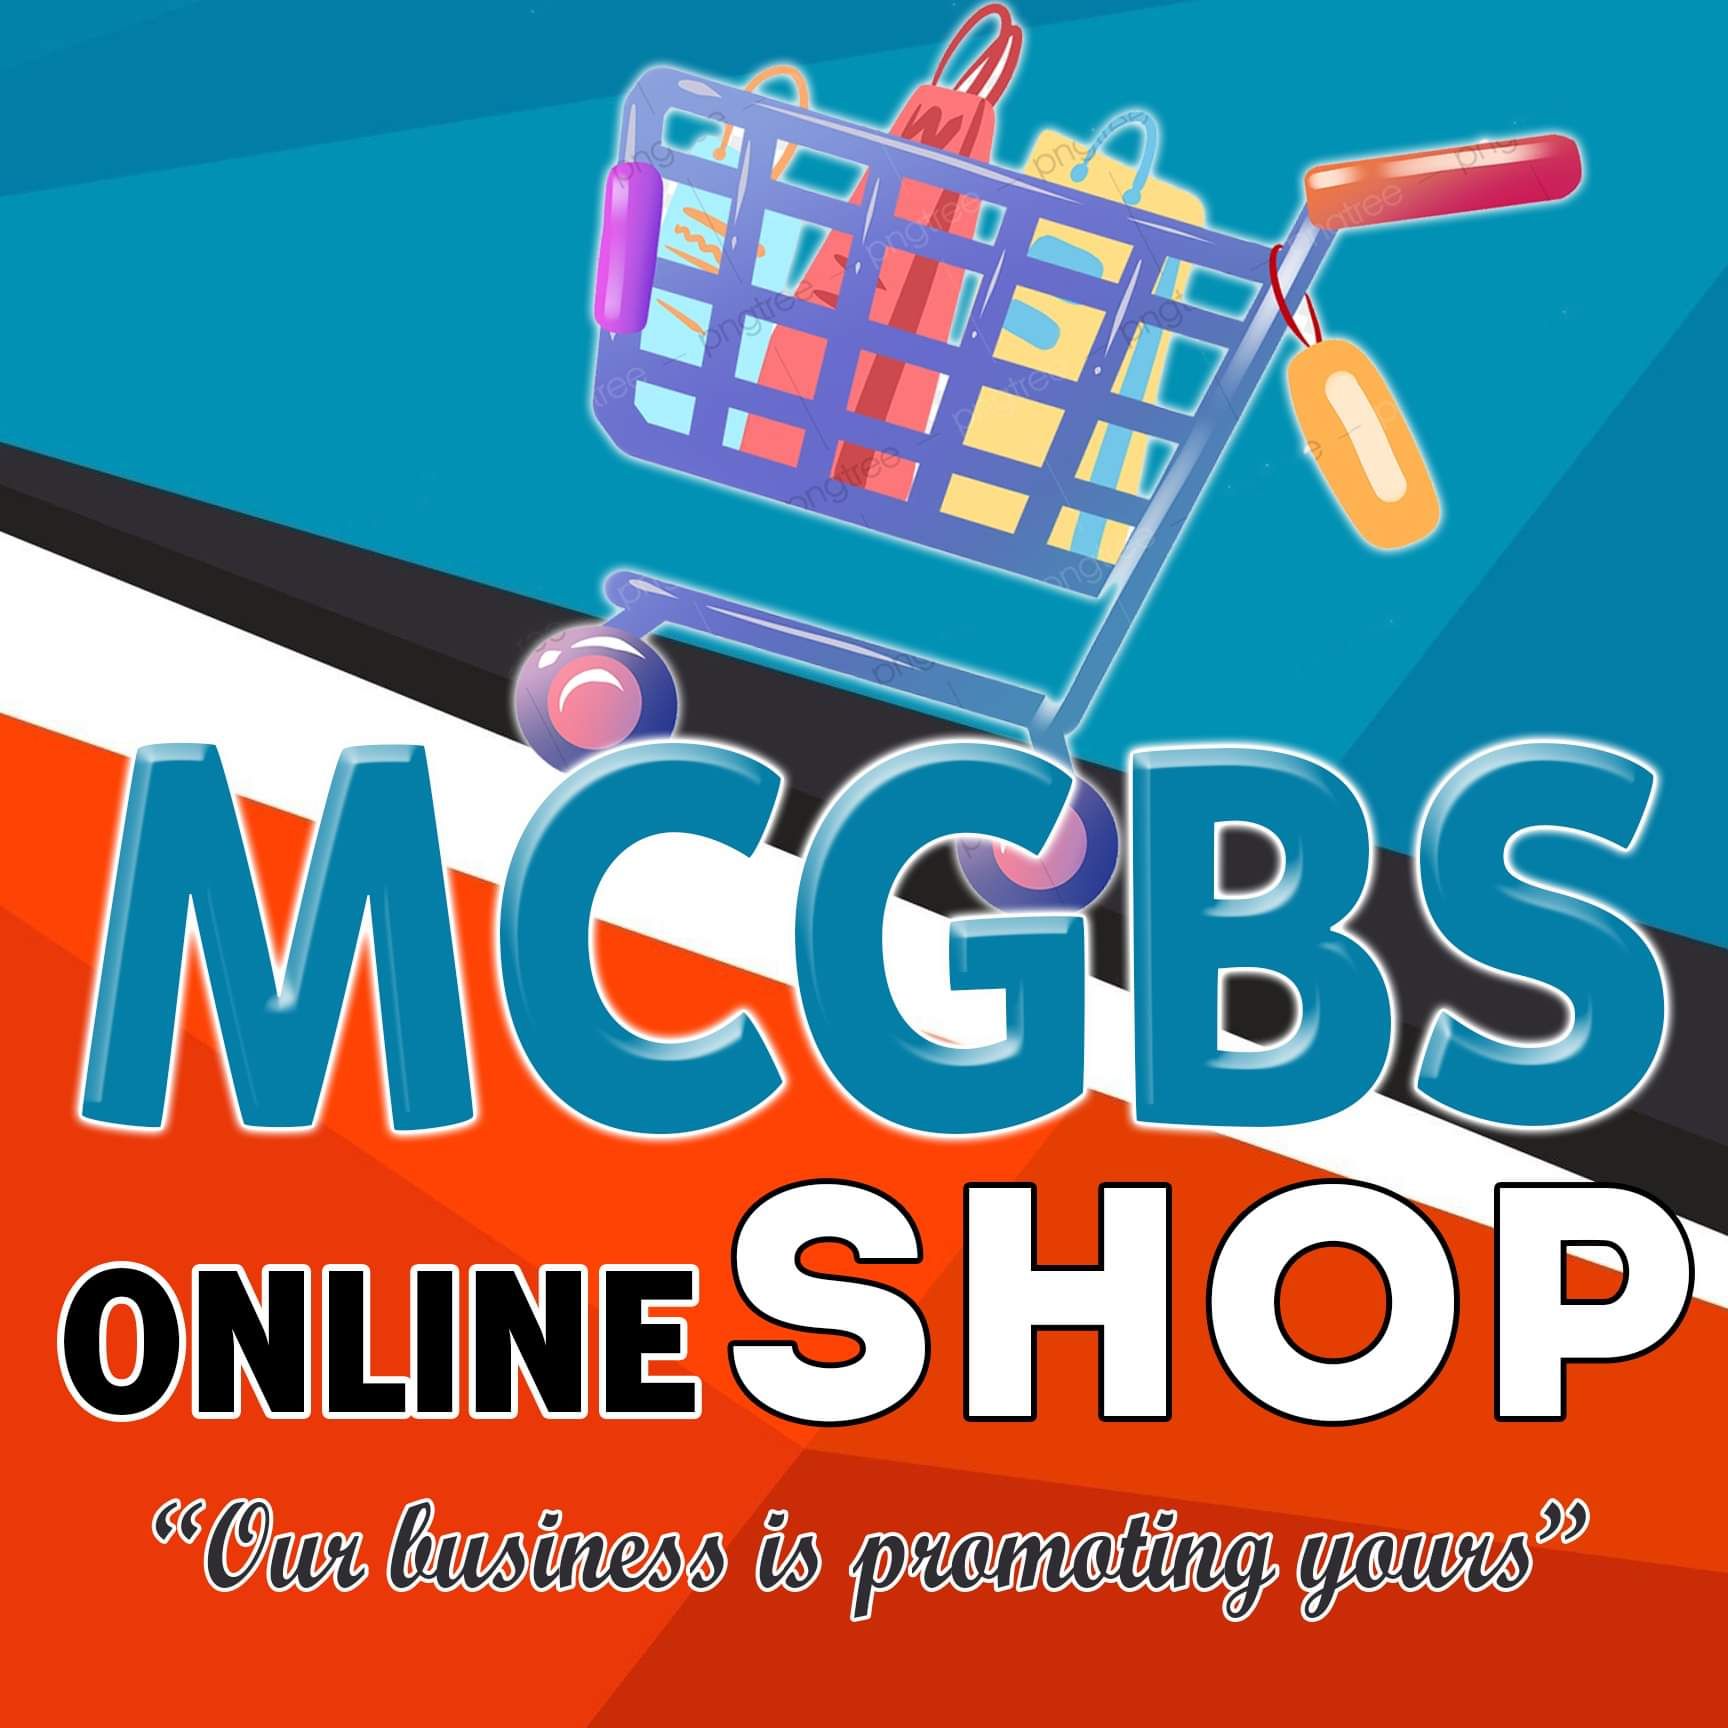 Shop at MCGBS Online Shop with great deals online | lazada.com.ph